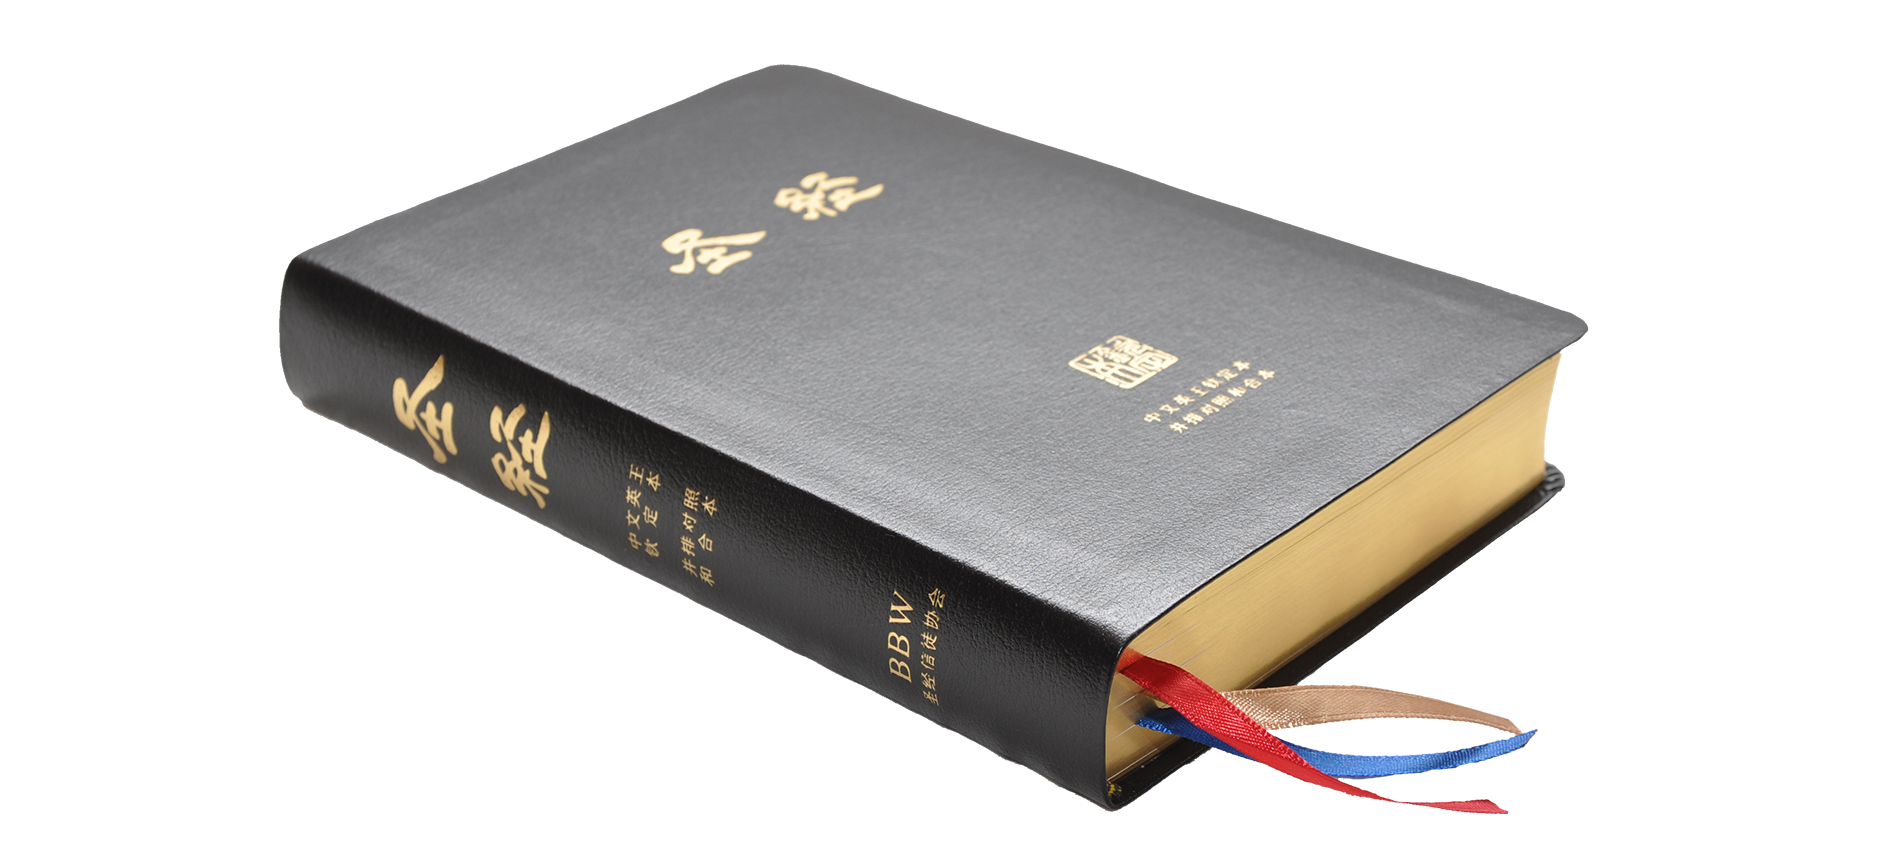 Chinese KJV Bible Released!